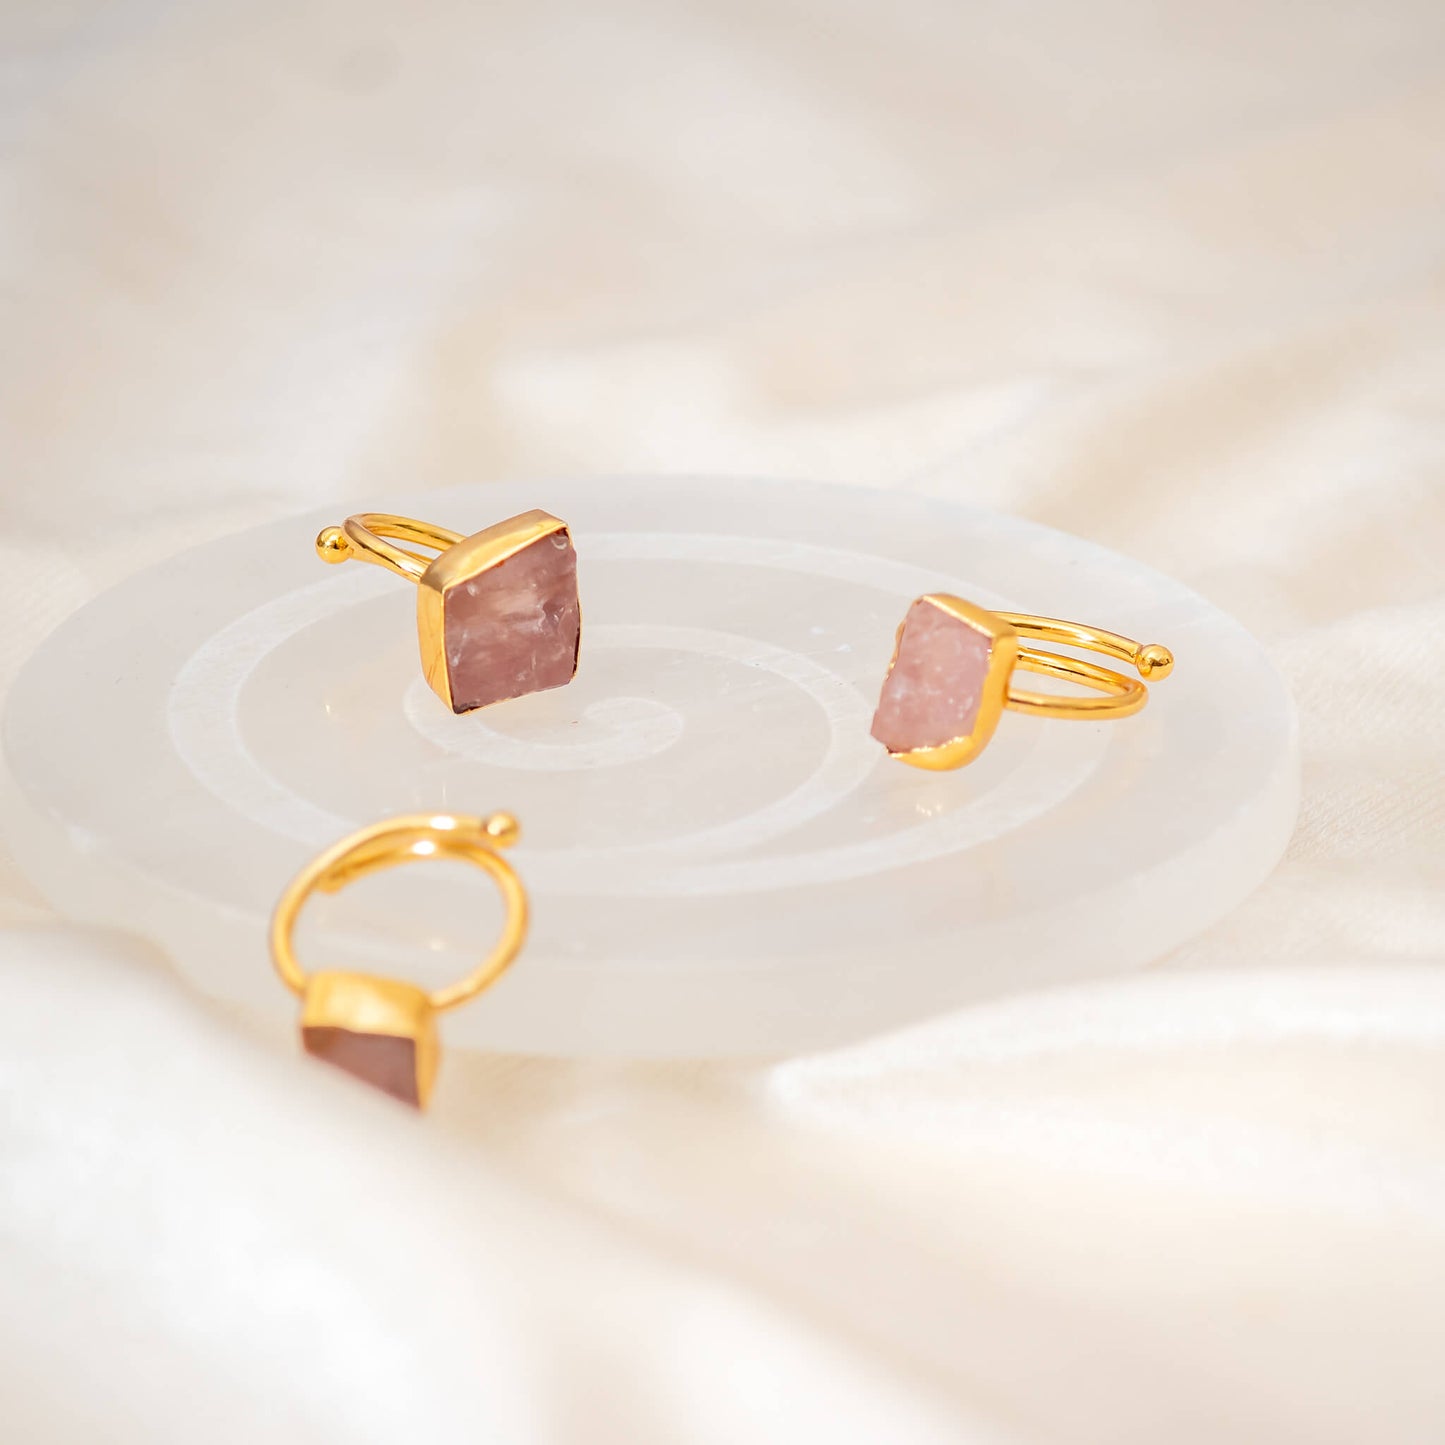 rose quartz ring for love and relation